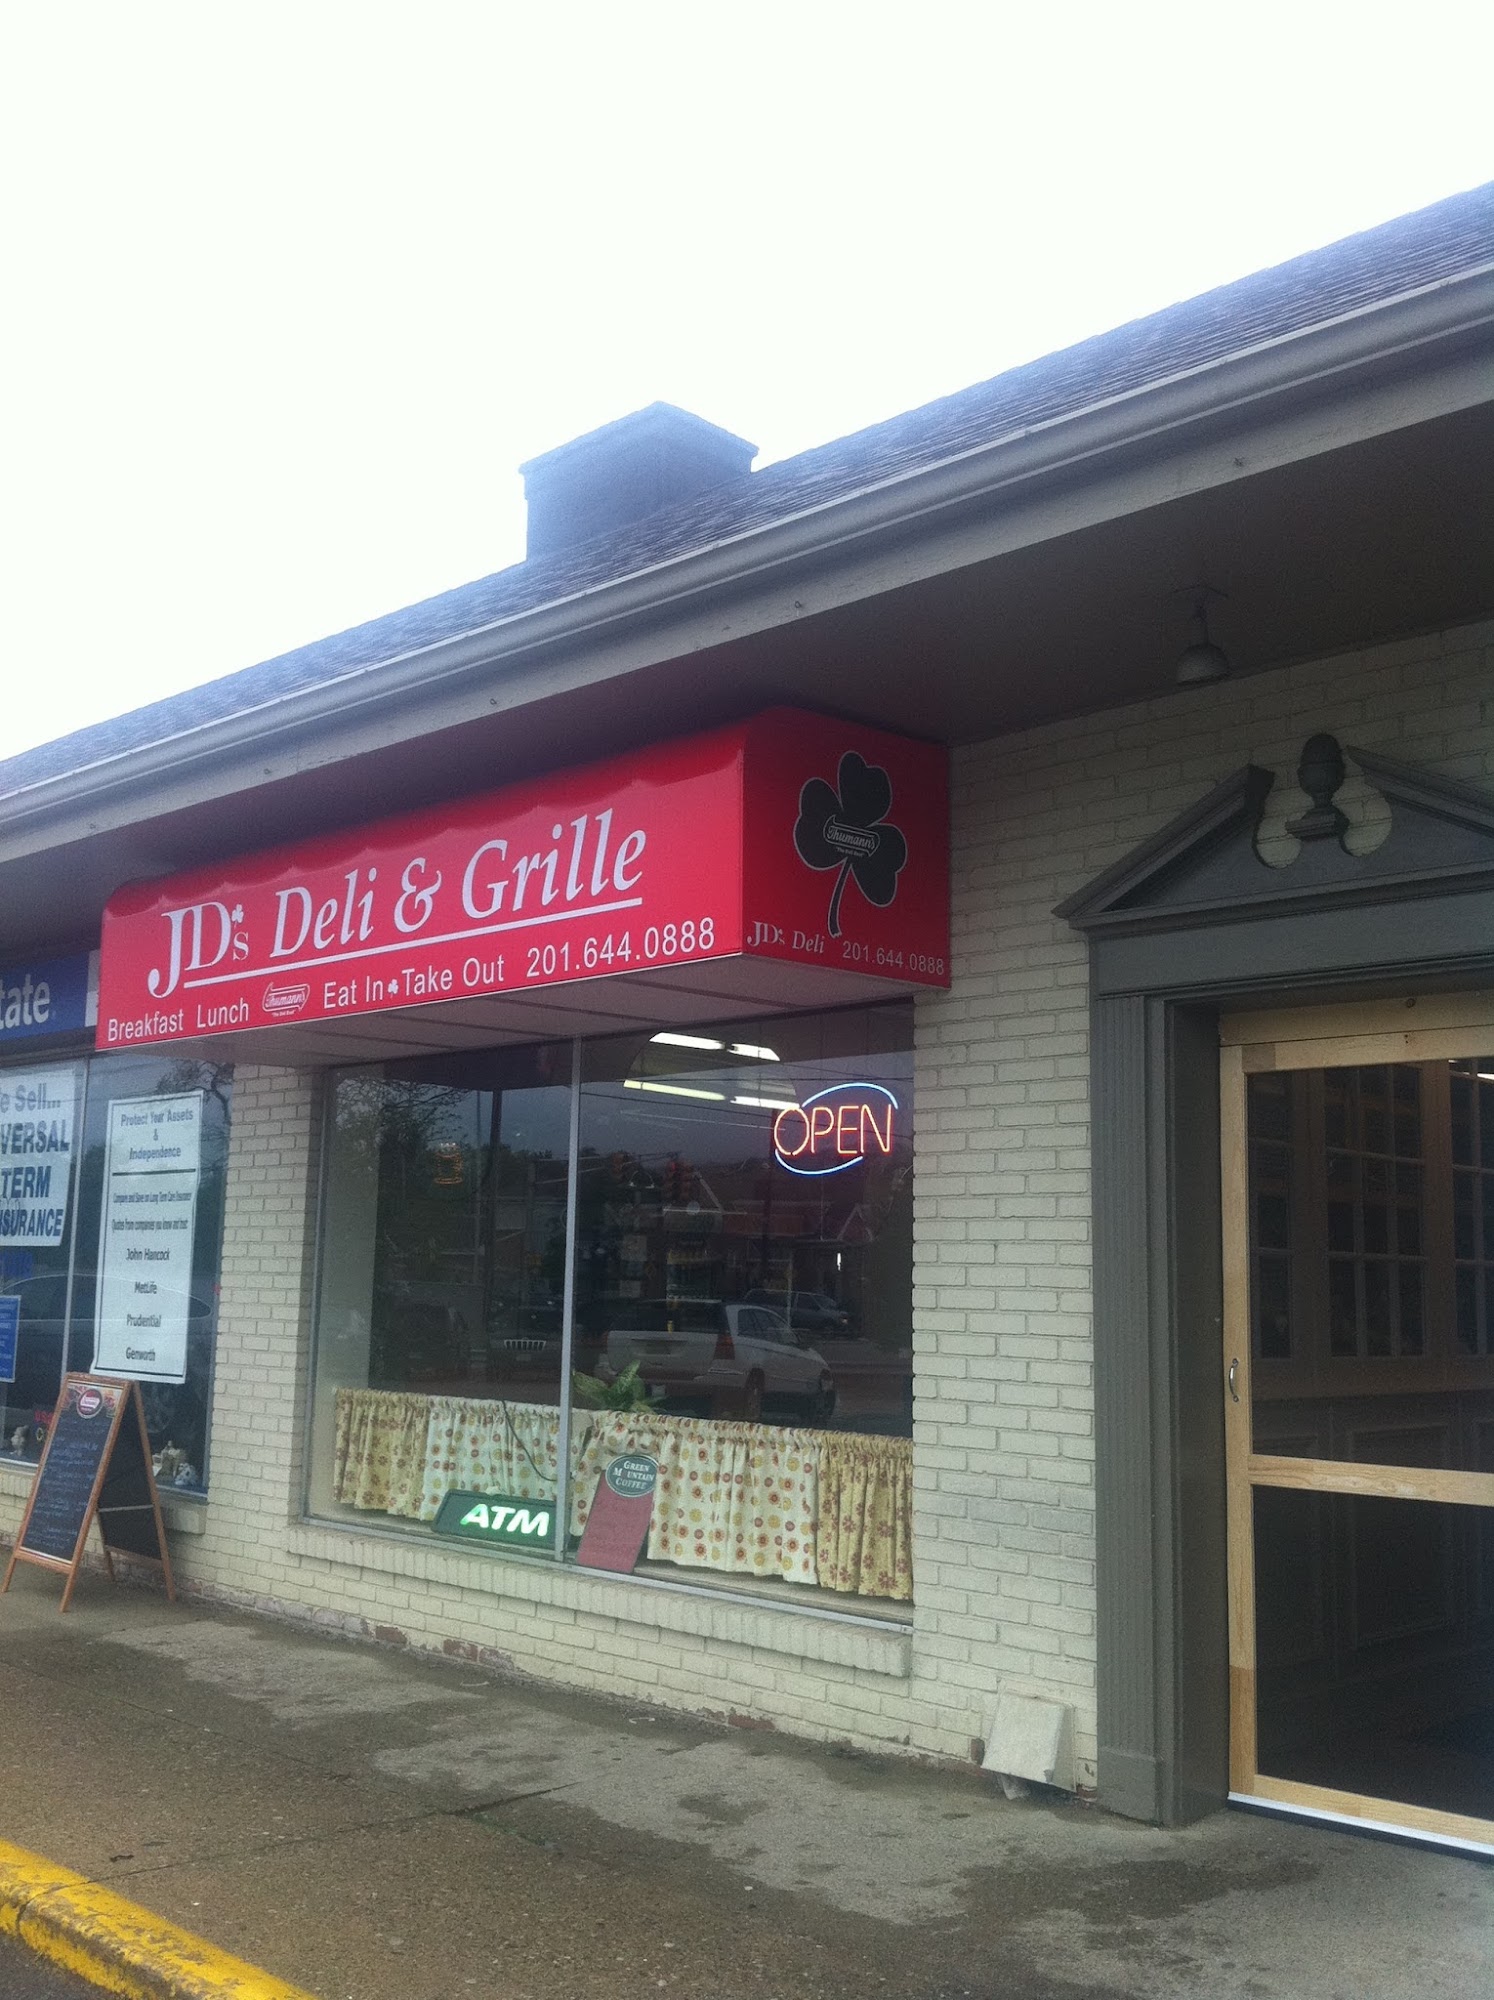 JD's Deli & Grille